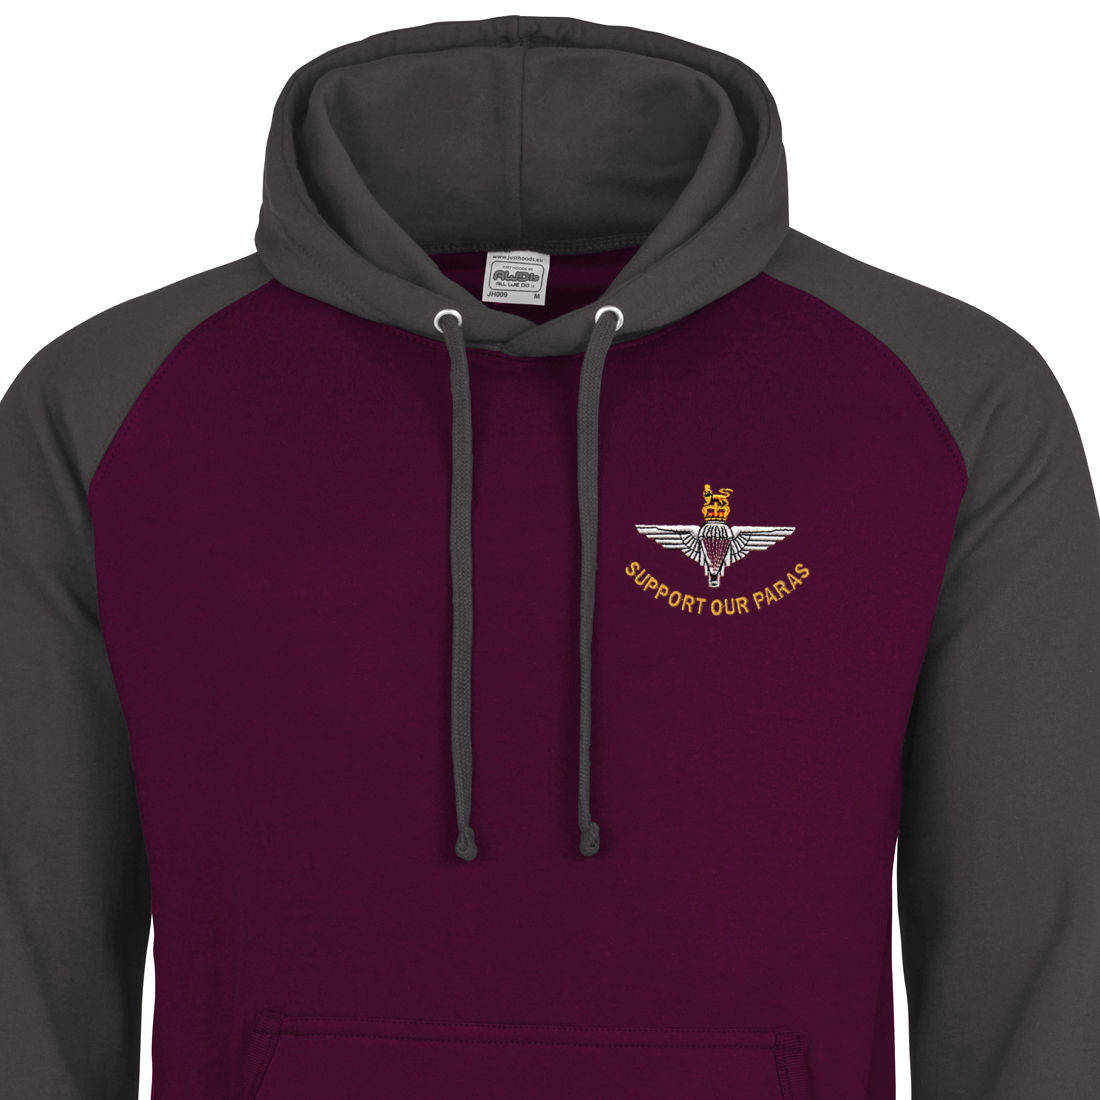 parachute regiment hoodie